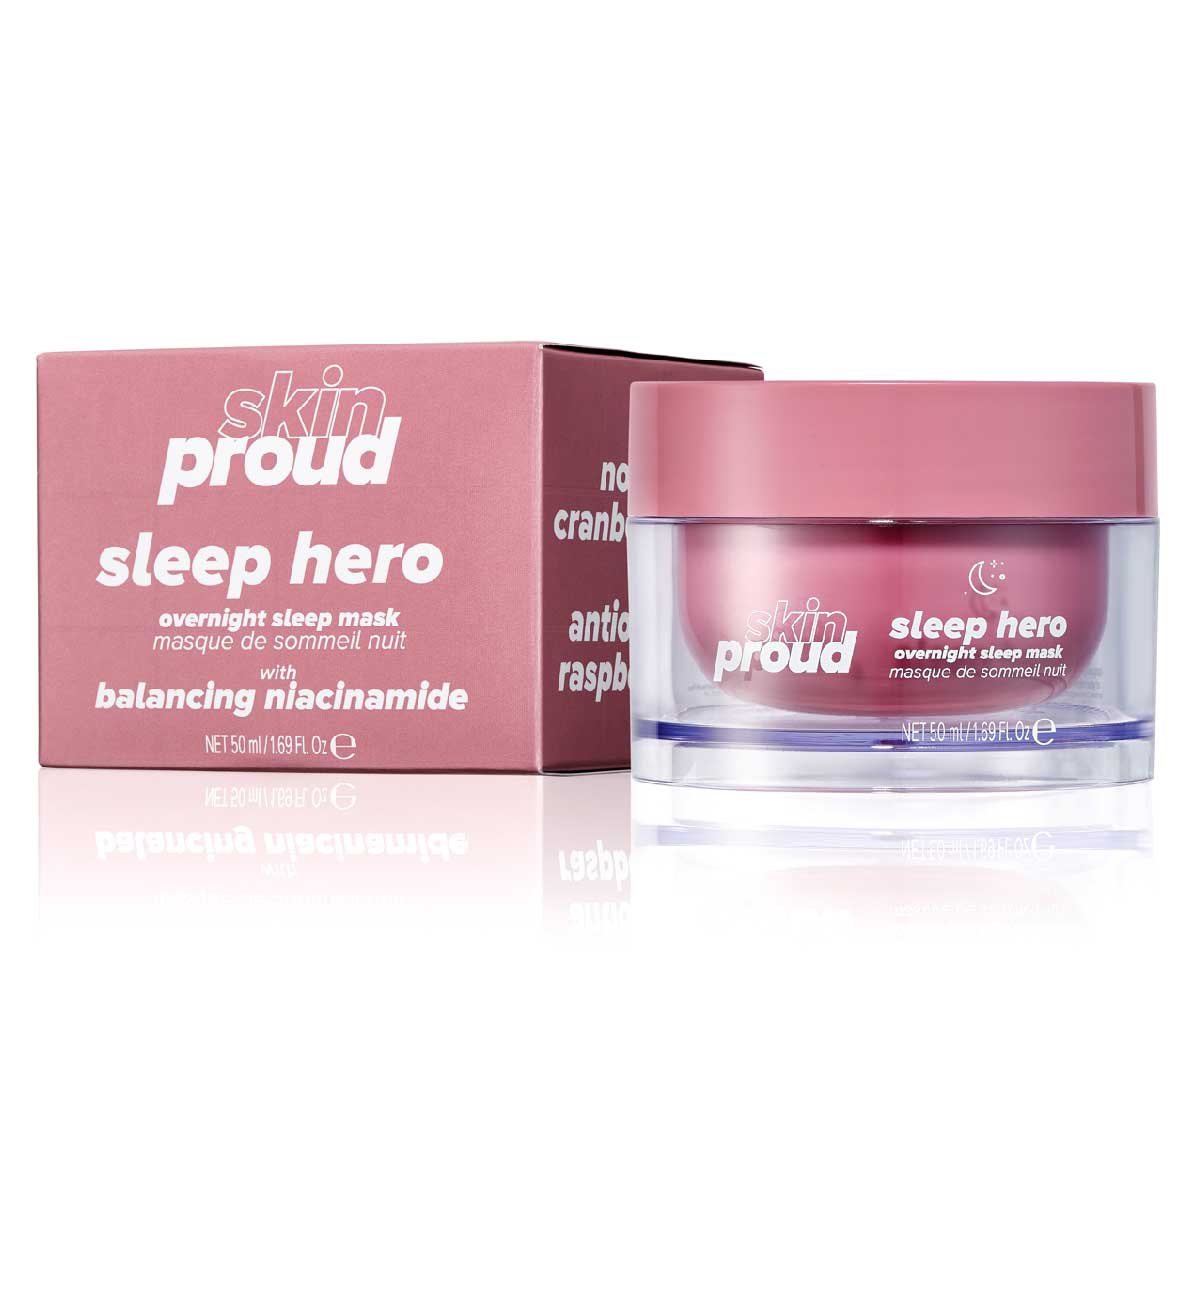 Skin Proud Sleep Hero, £14.95